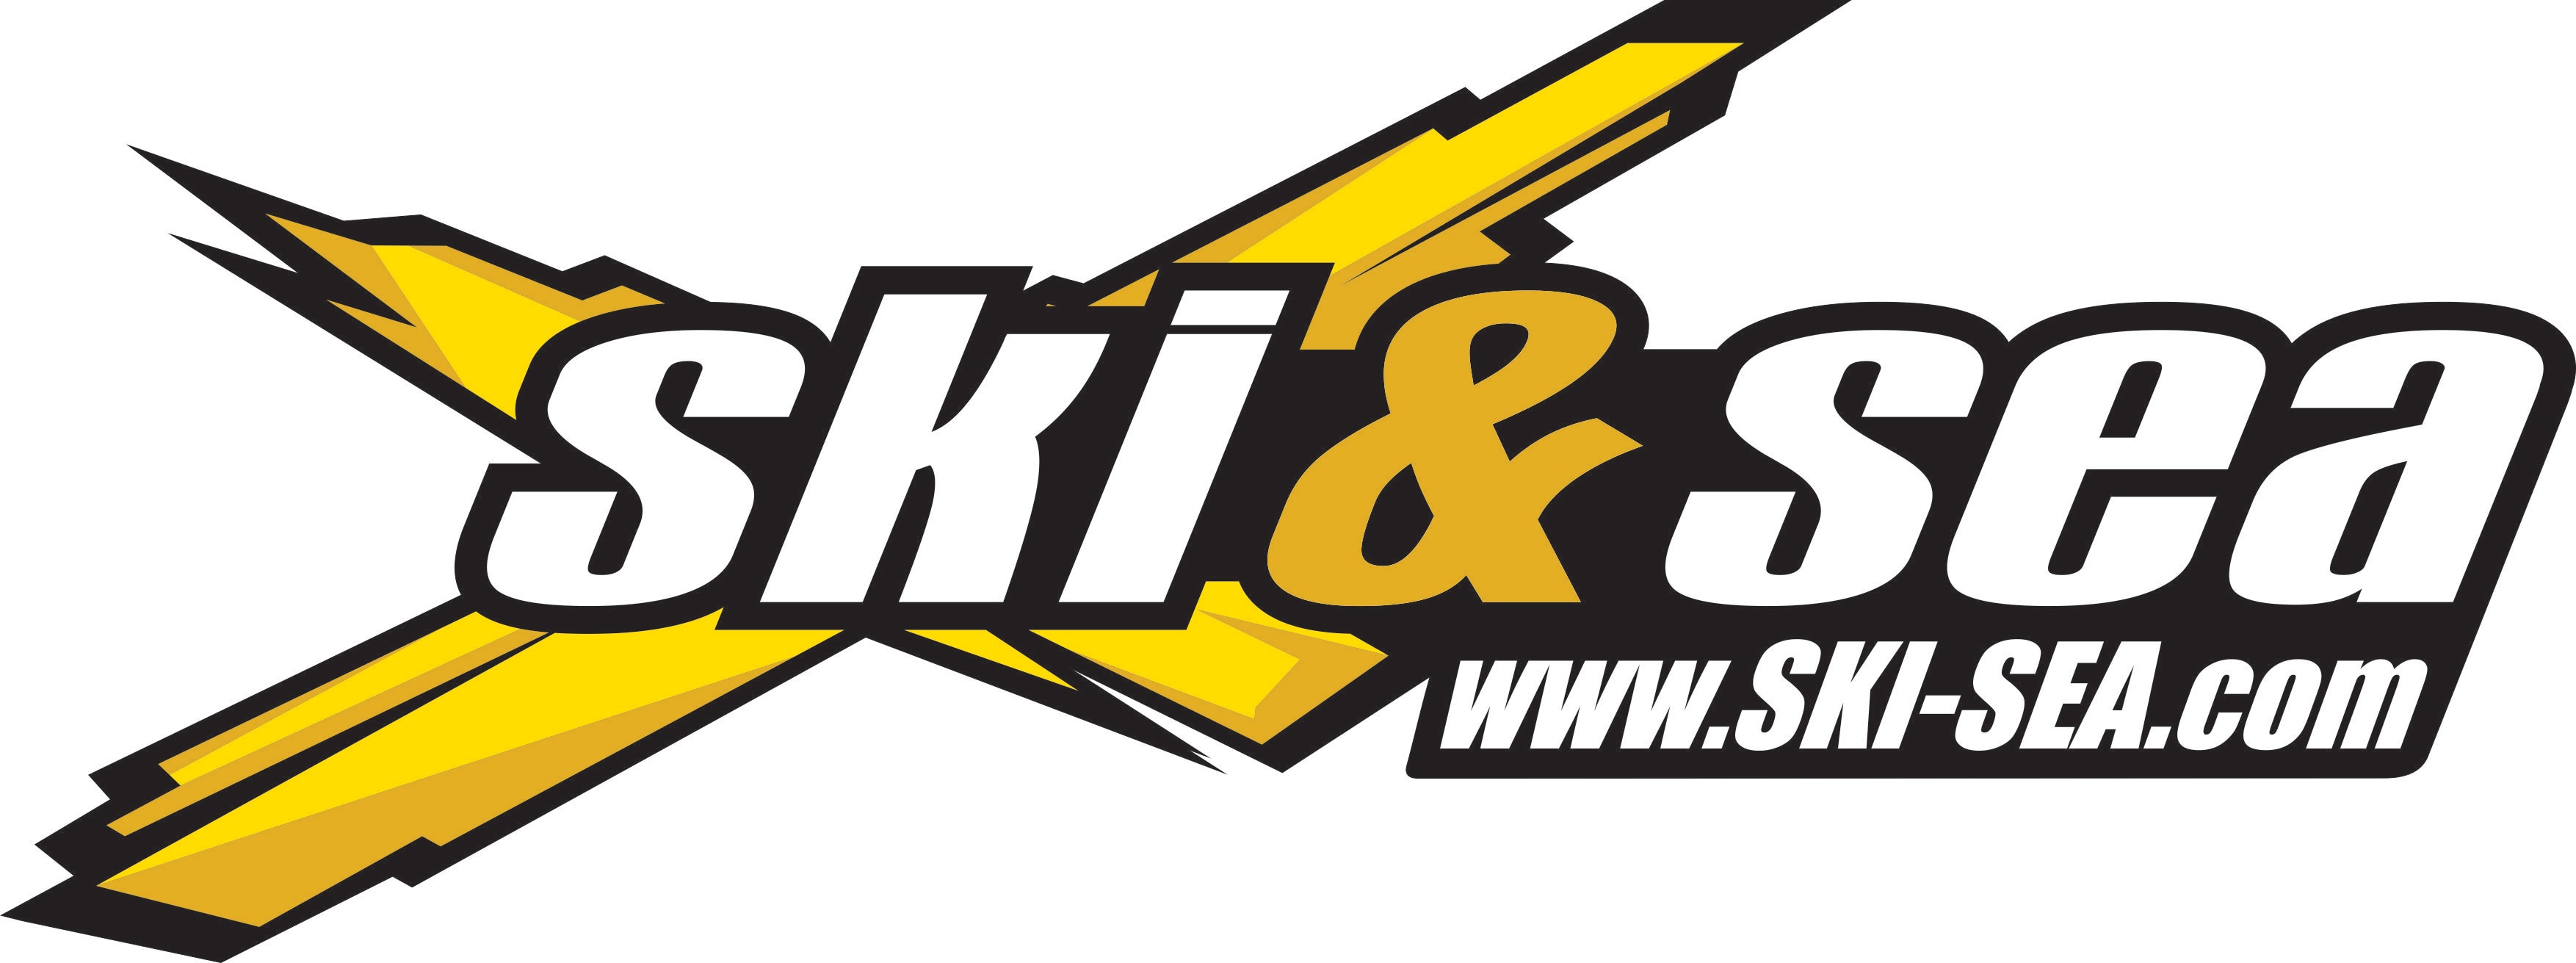 Ski&Sea logo 